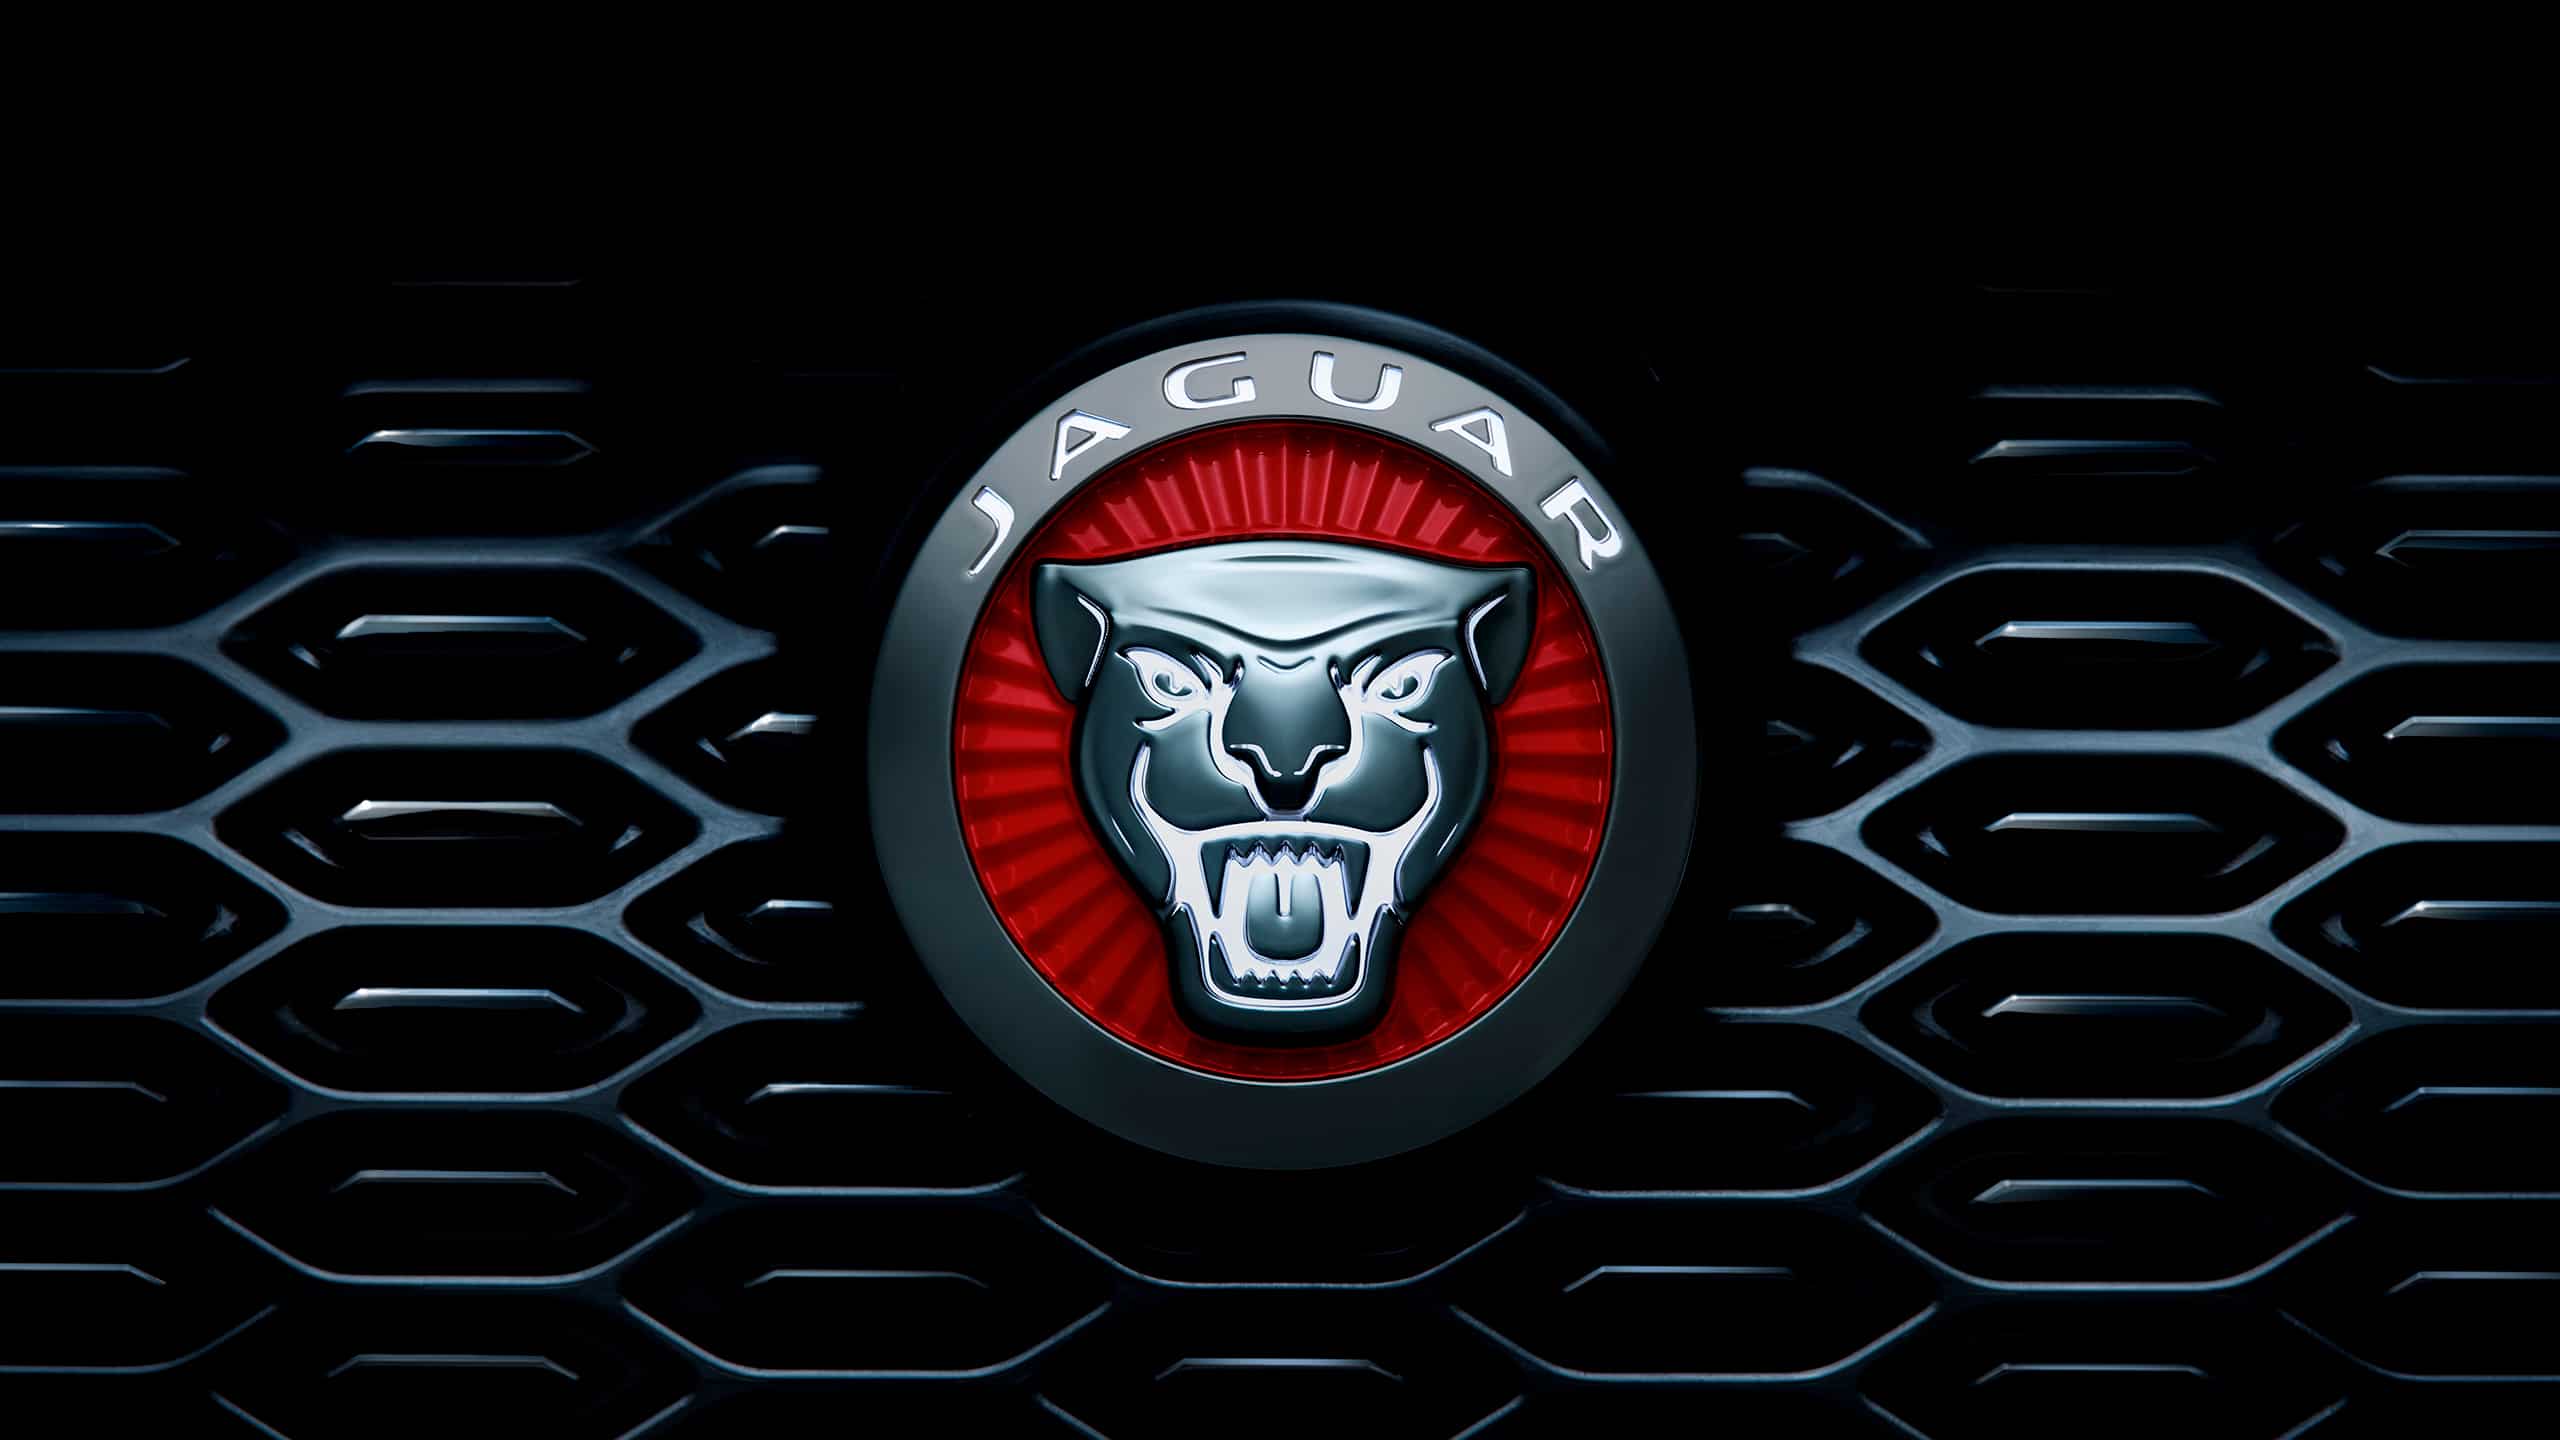 Jaguar car close up view of logo and grille 